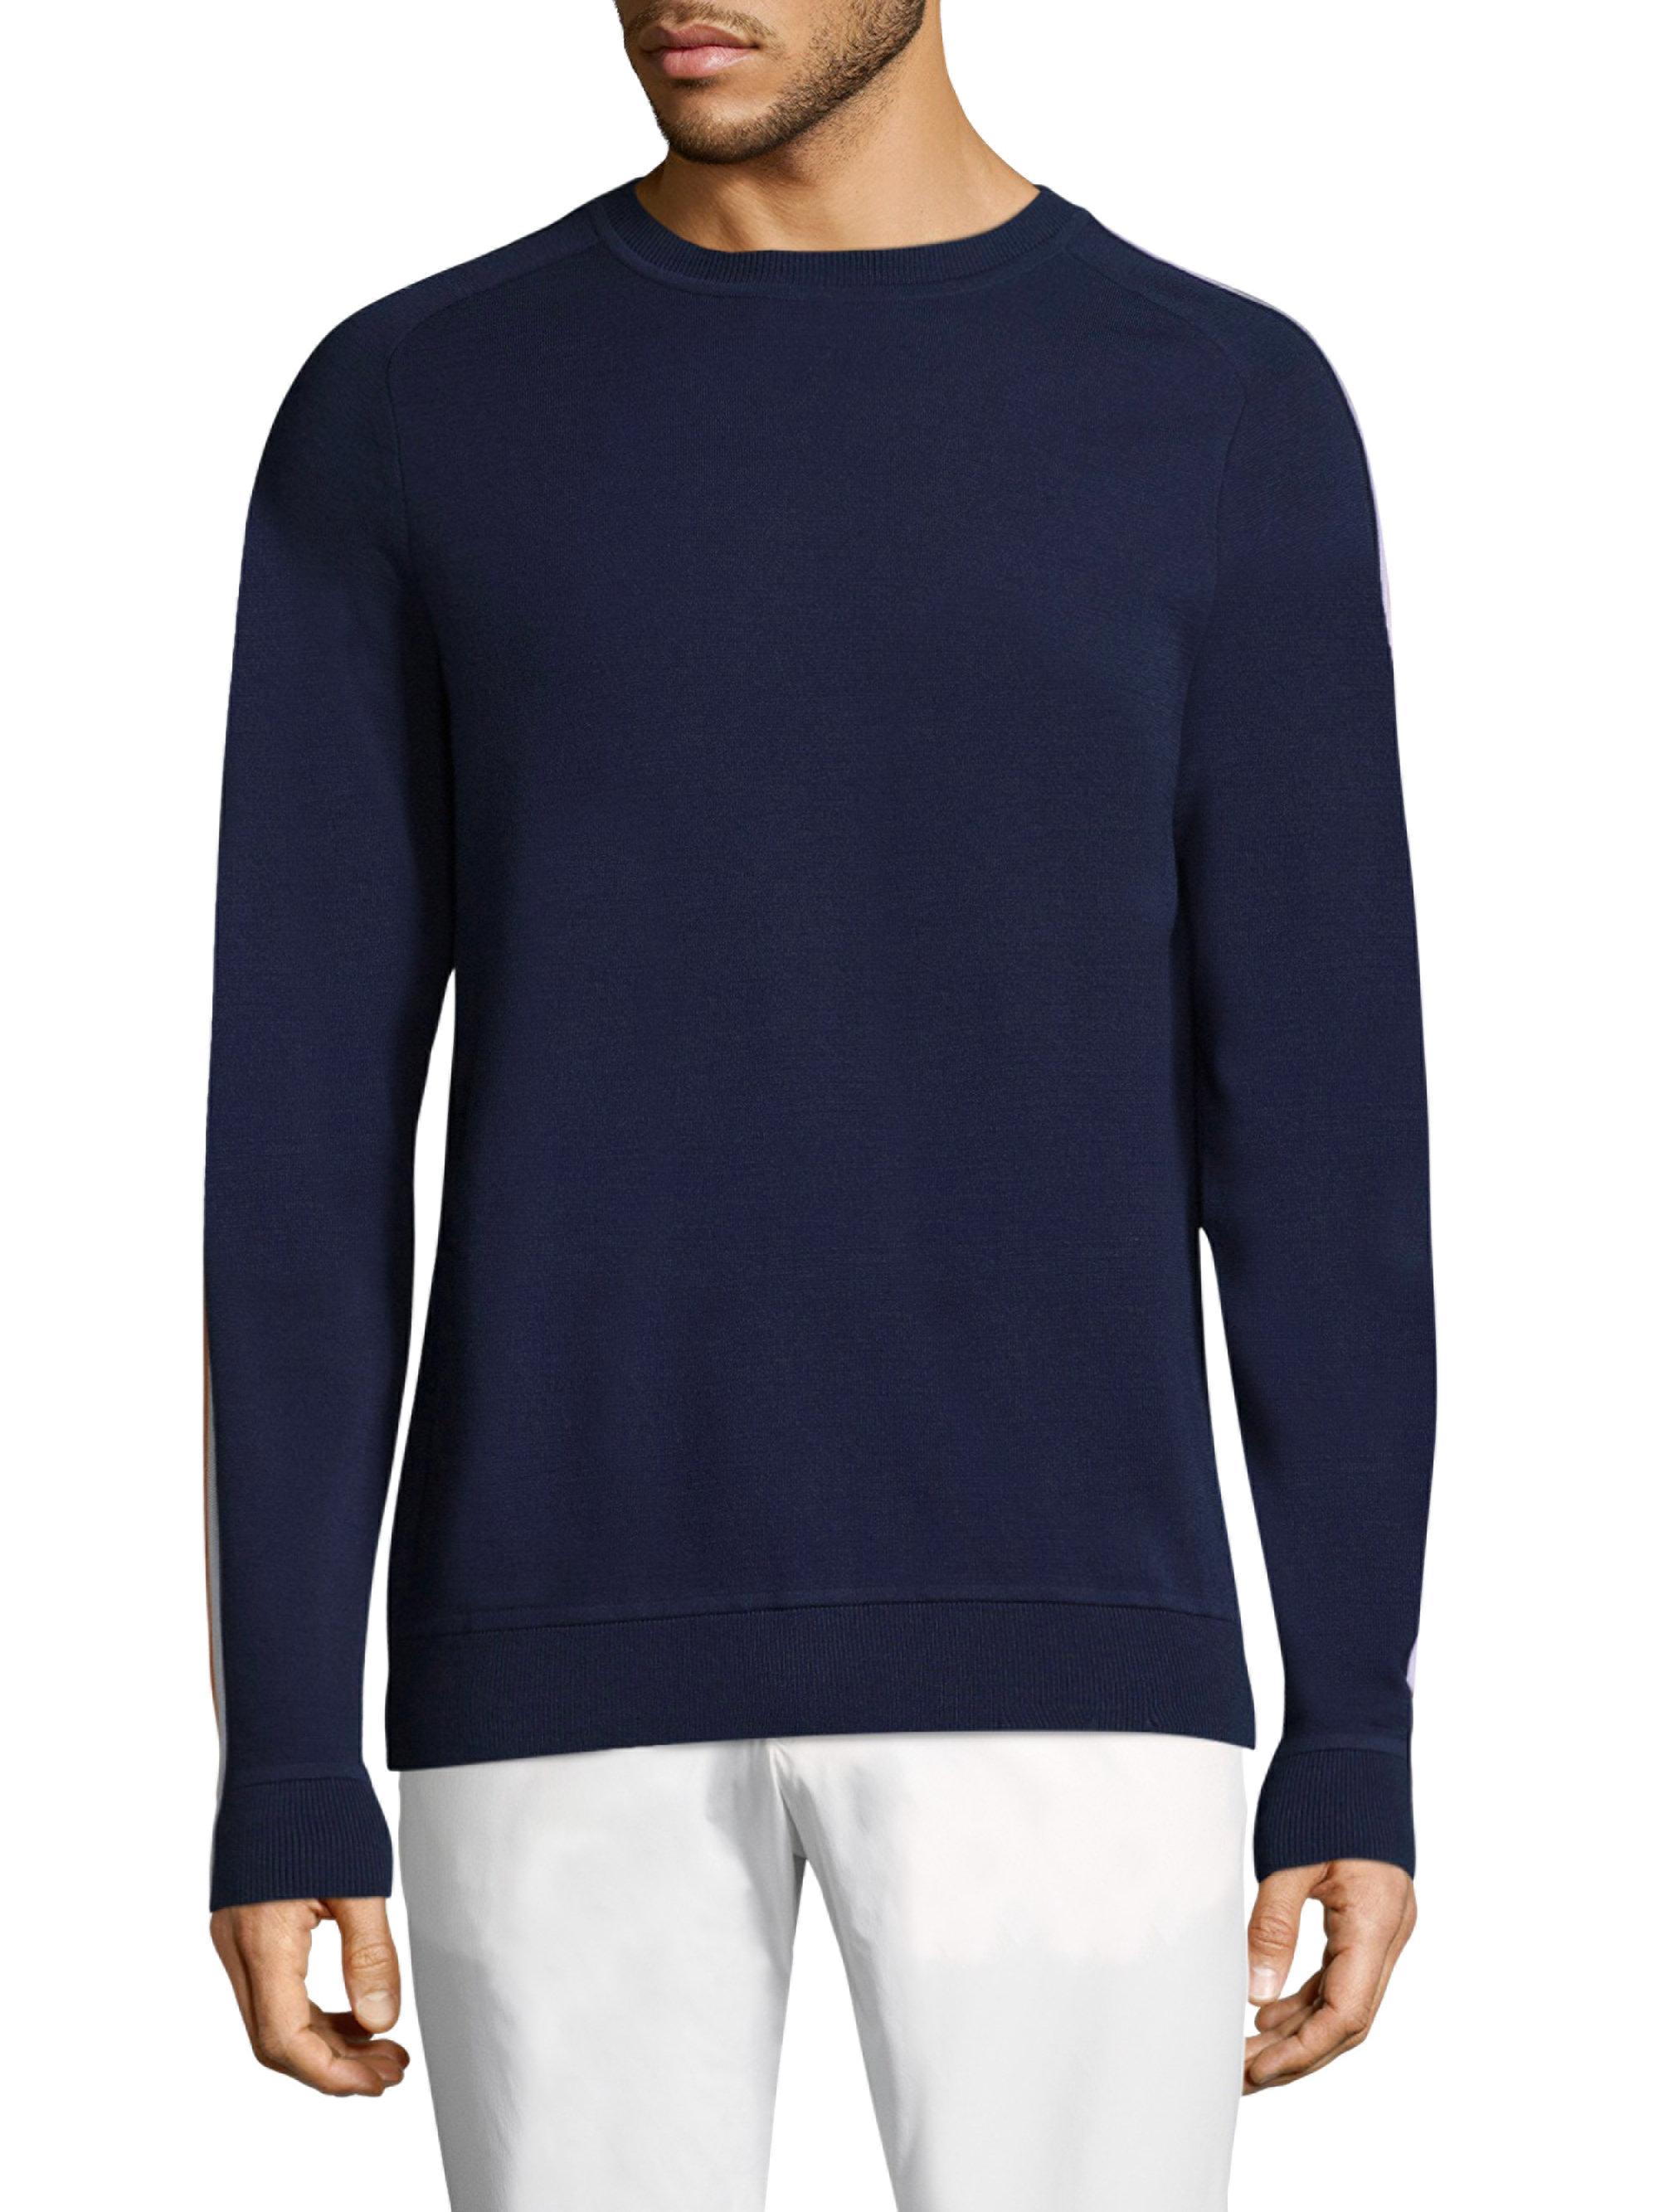 Lyst - Vilebrequin Crewneck Wool Pullover in Blue for Men